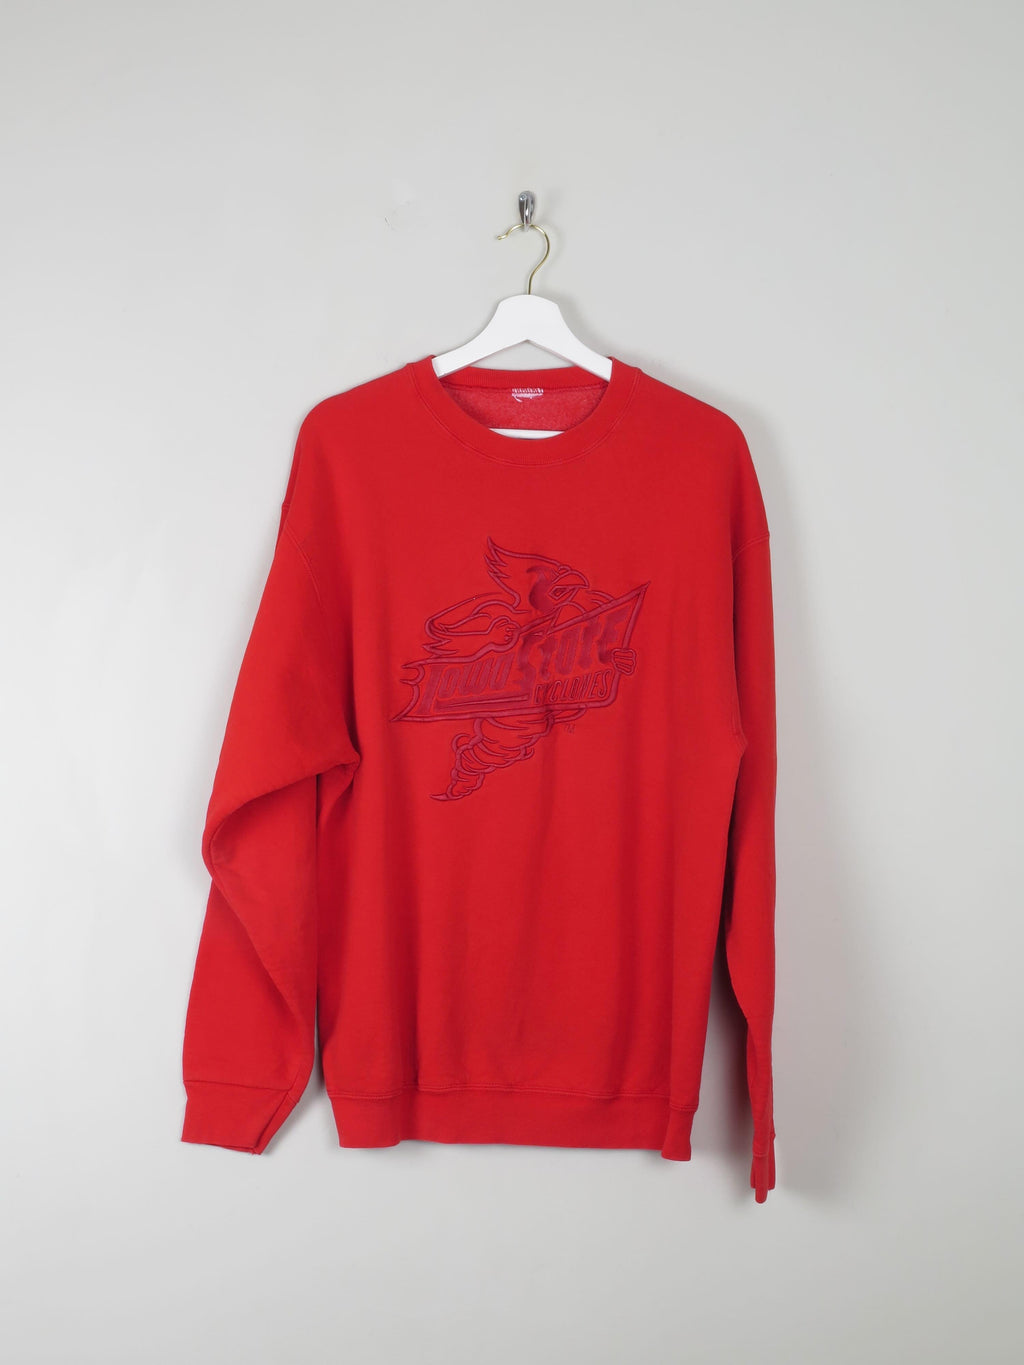 Men's Vintage Red Embroidered Sweatshirt L - The Harlequin